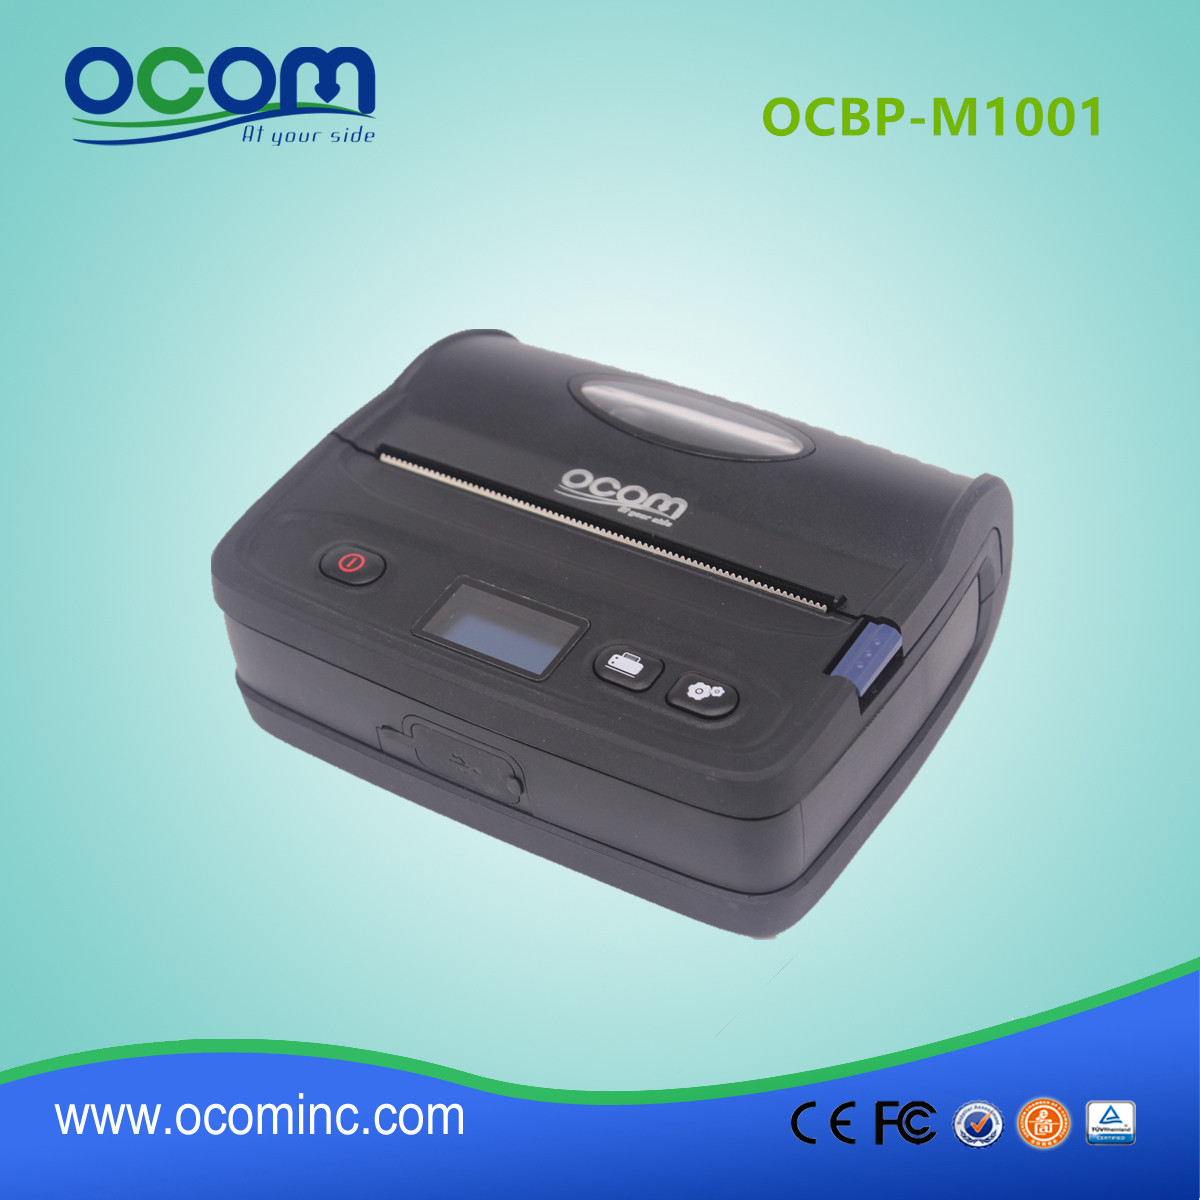 OCBP-M1001 Black Mobile Adhesive POS Thermal Empfang Barcode Label Printer